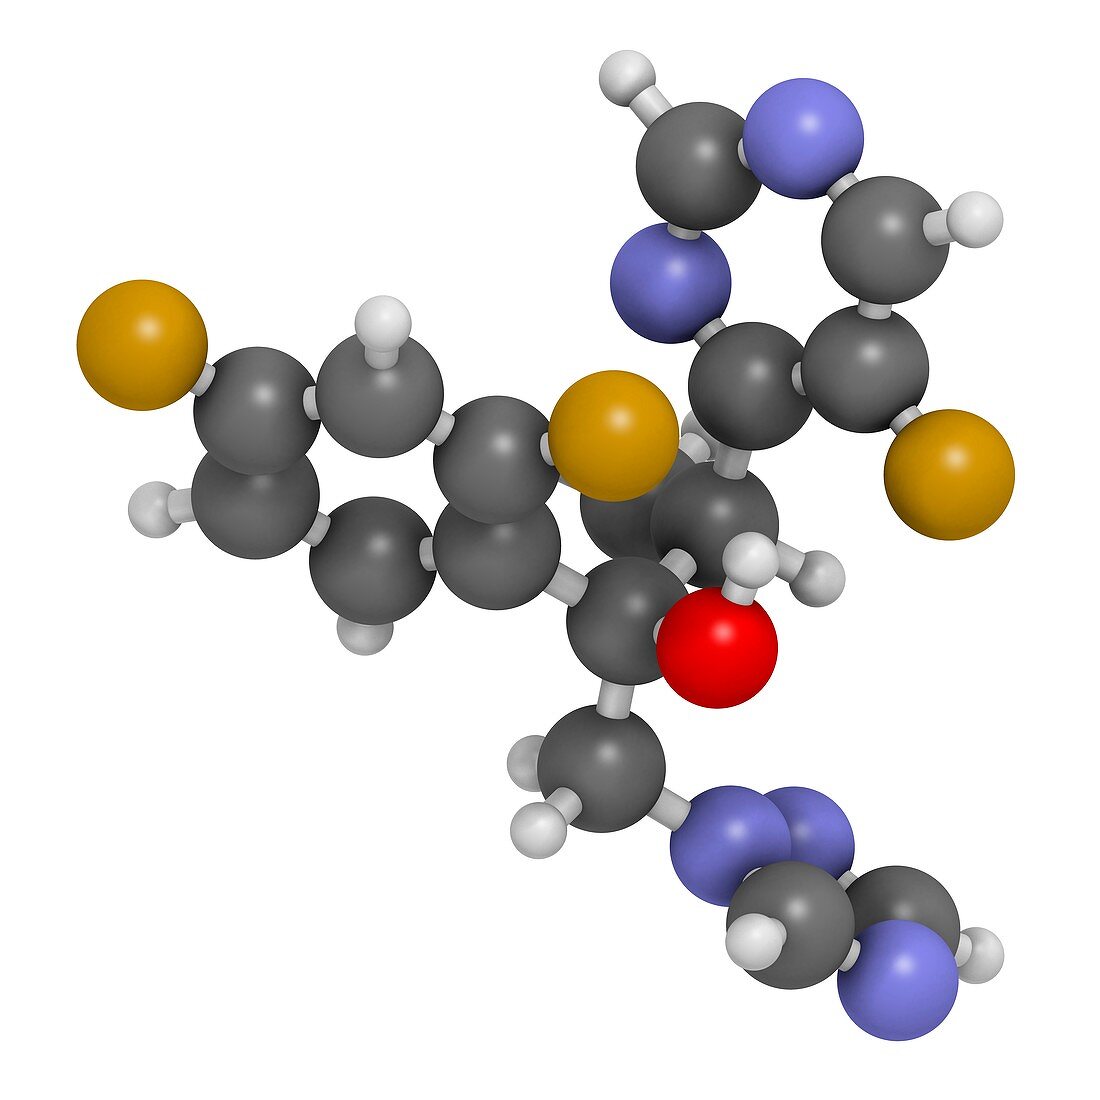 Voriconazole antifungal drug molecule